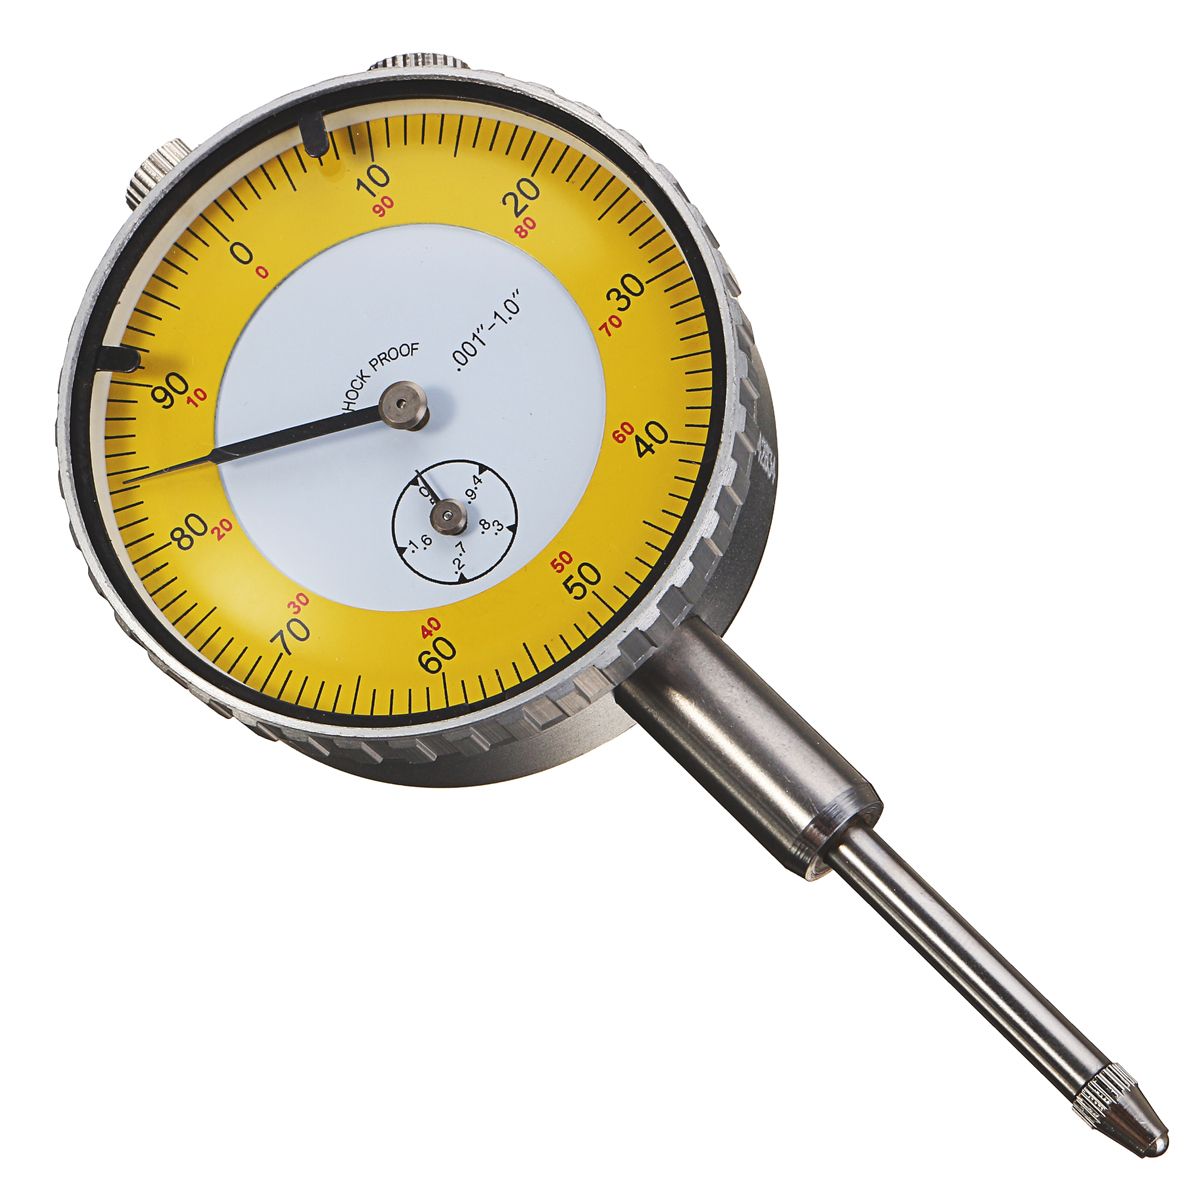 Dial-Test-Indicator-Lever-Gauge-Scale-Meter-Accurancy-0001quot-10quot-115x55x24mm-1234998